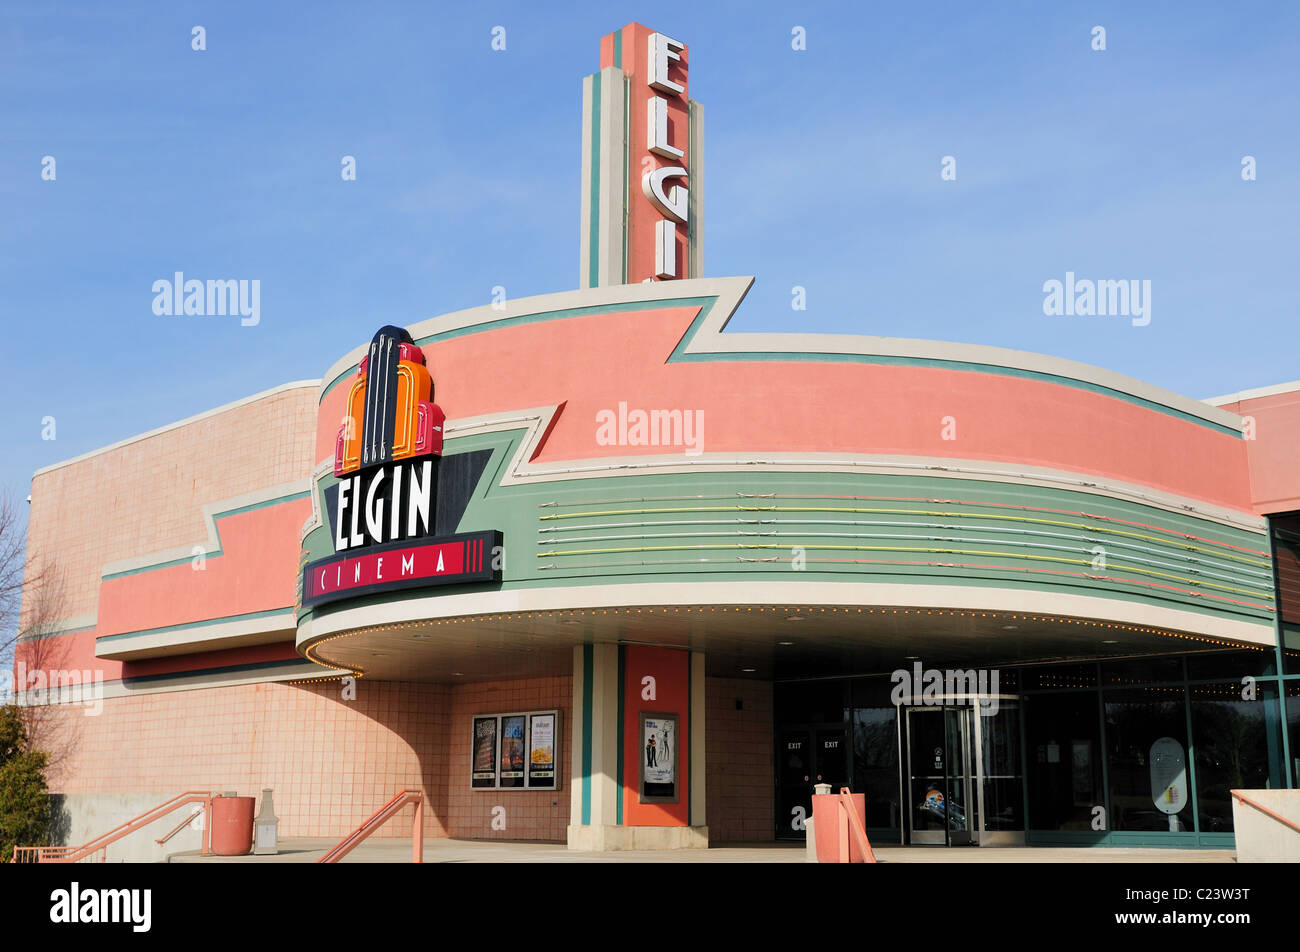 The art deco Elgin Cinema movie theatre. Elgin, Illinois, USA. Stock Photo